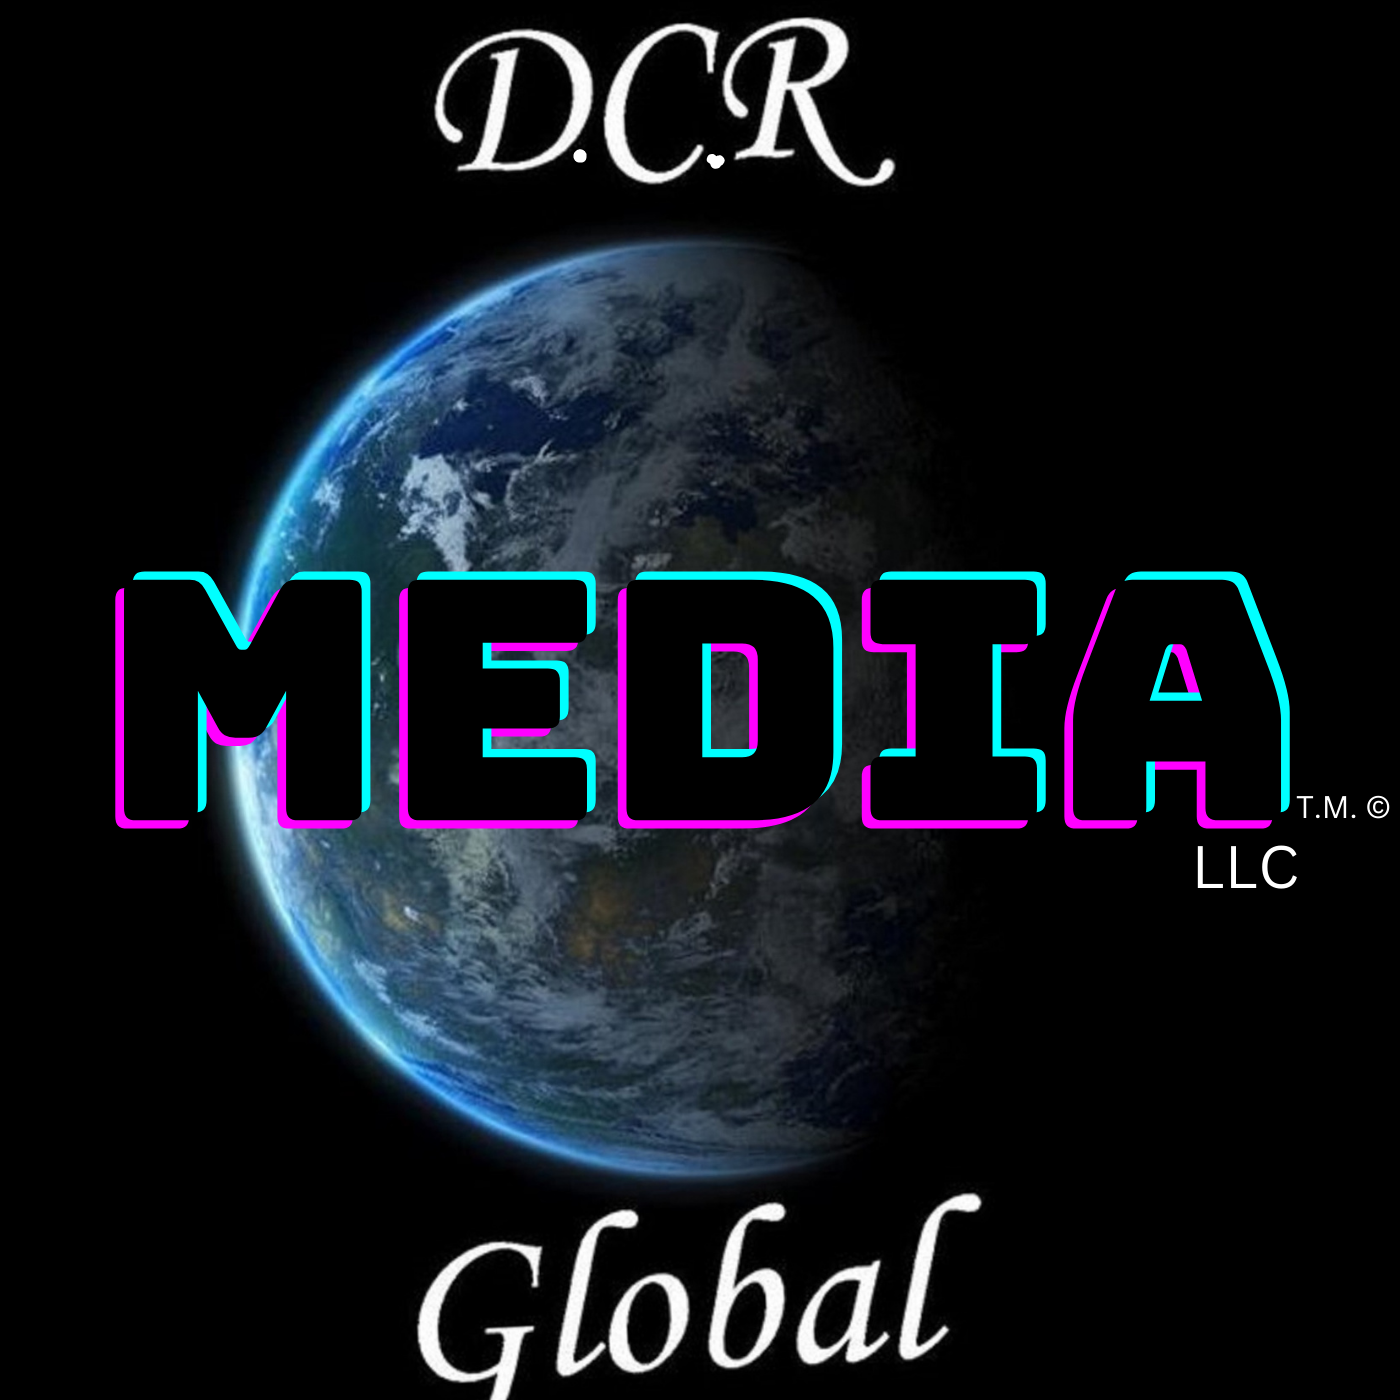 D.C.R GLOBAL MEDIA LLC